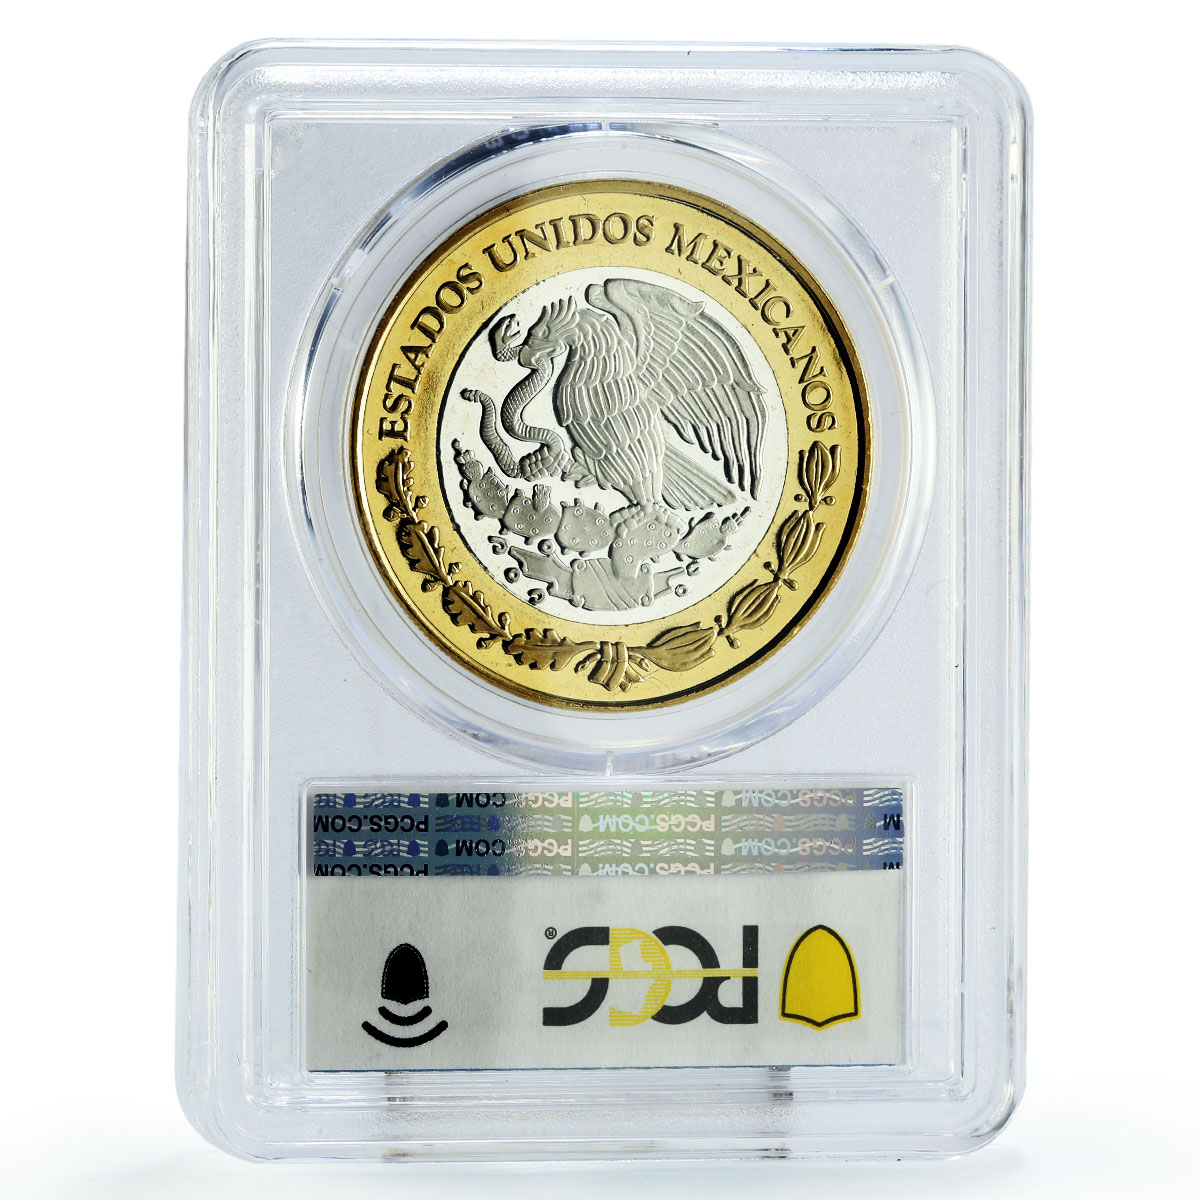 Mexico 100 pesos Numismatica Heritage 1824 8 Reales PL69 PCGS bimetal coin 2011